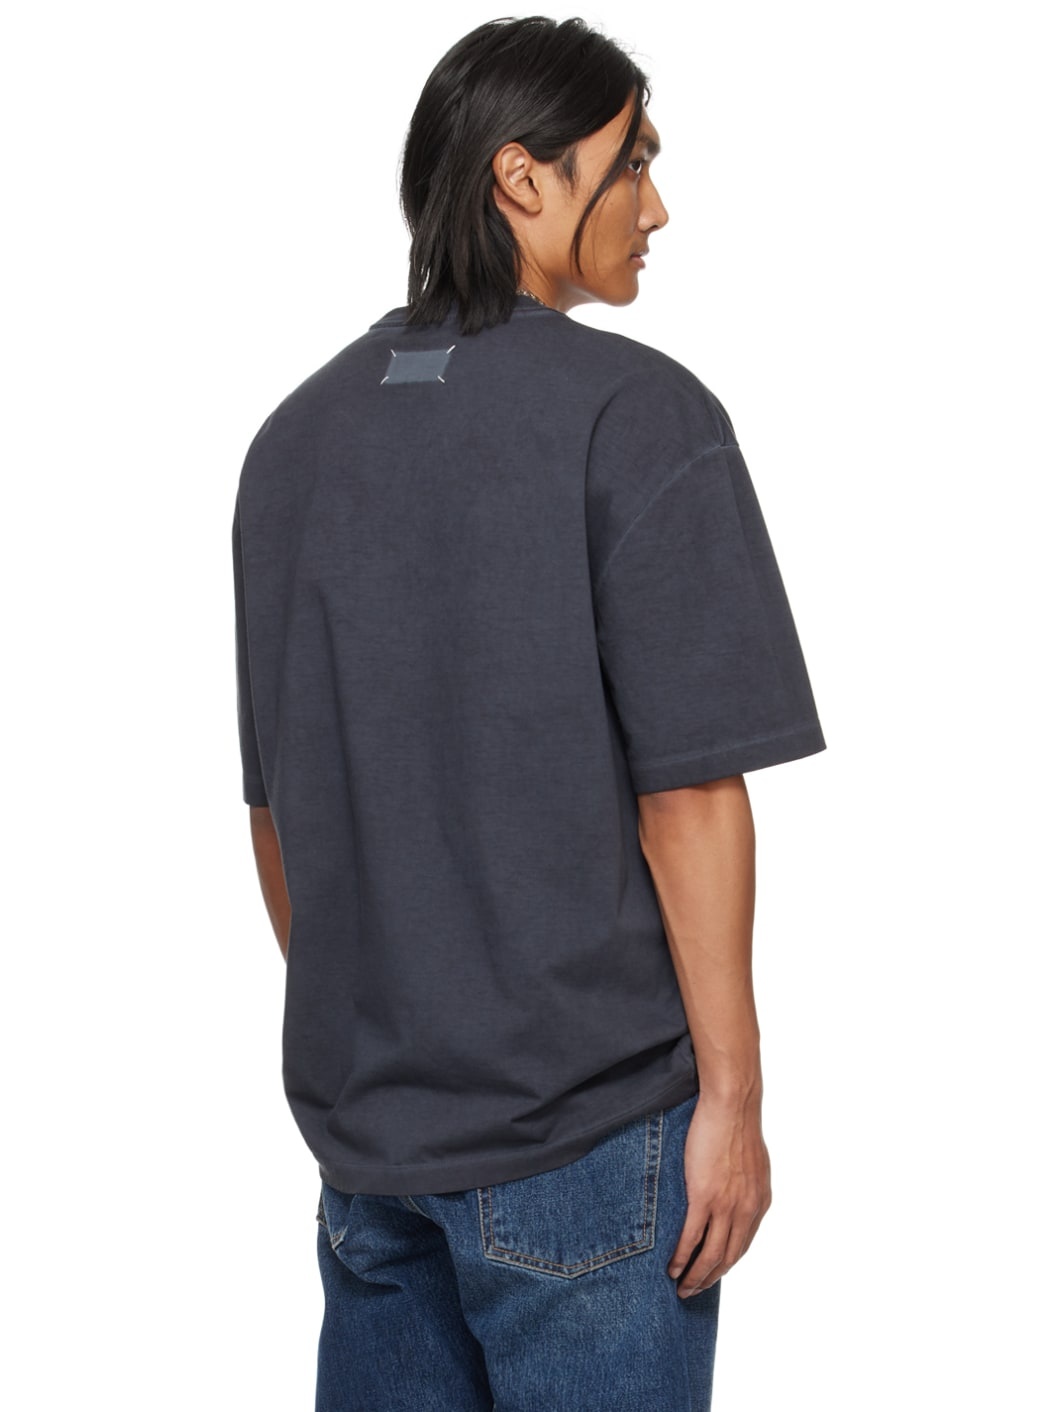 Gray Weathered T-Shirt - 3